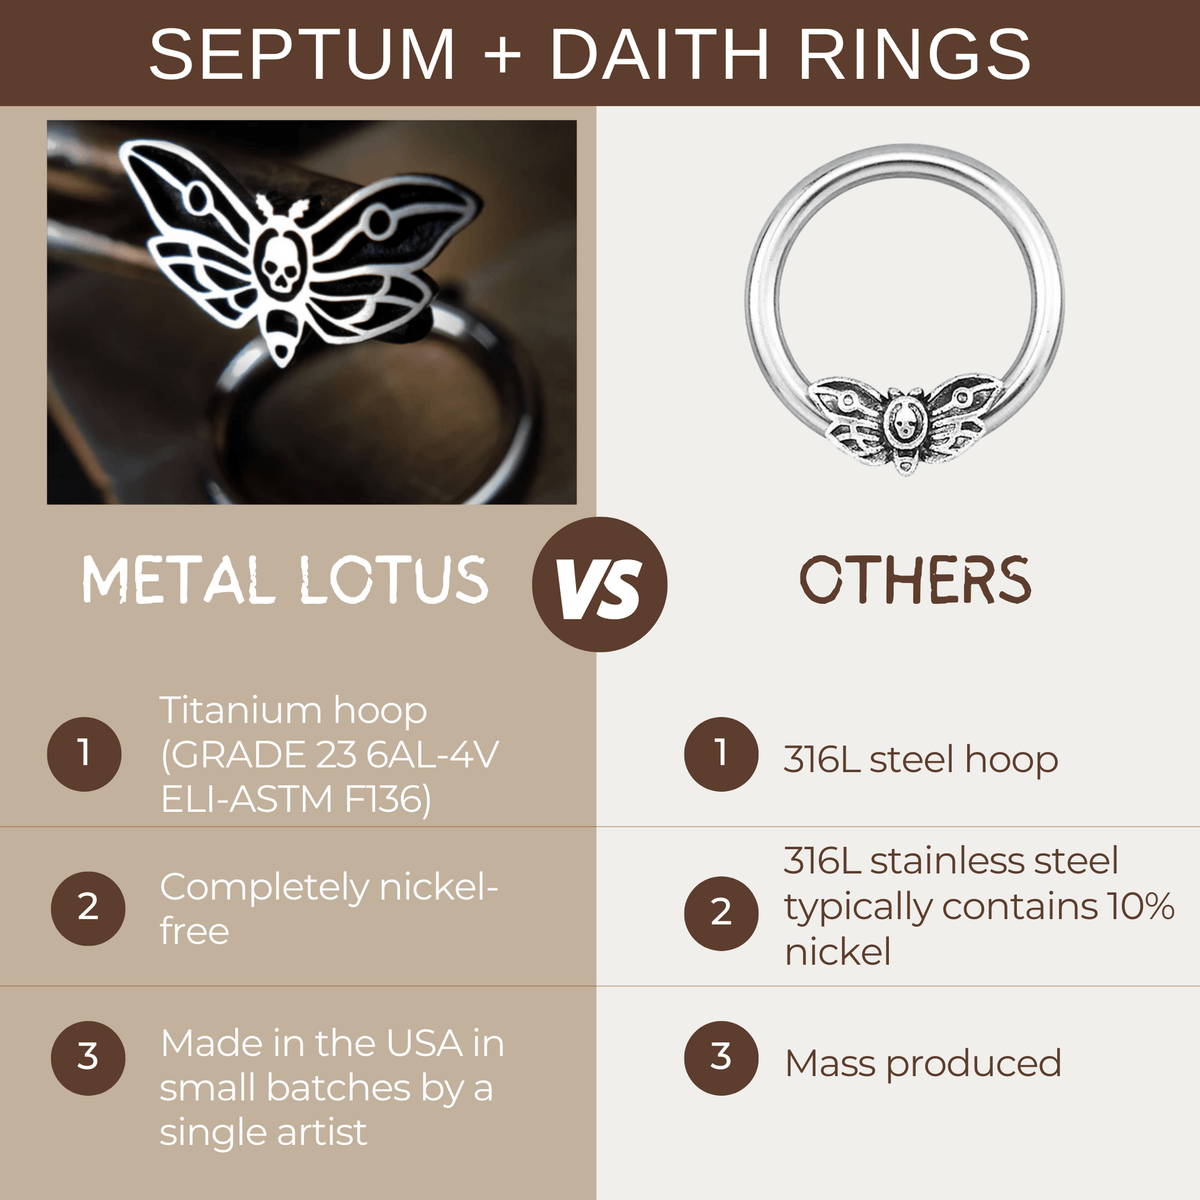 Spider Web Septum + Daith Ring - Metal Lotus